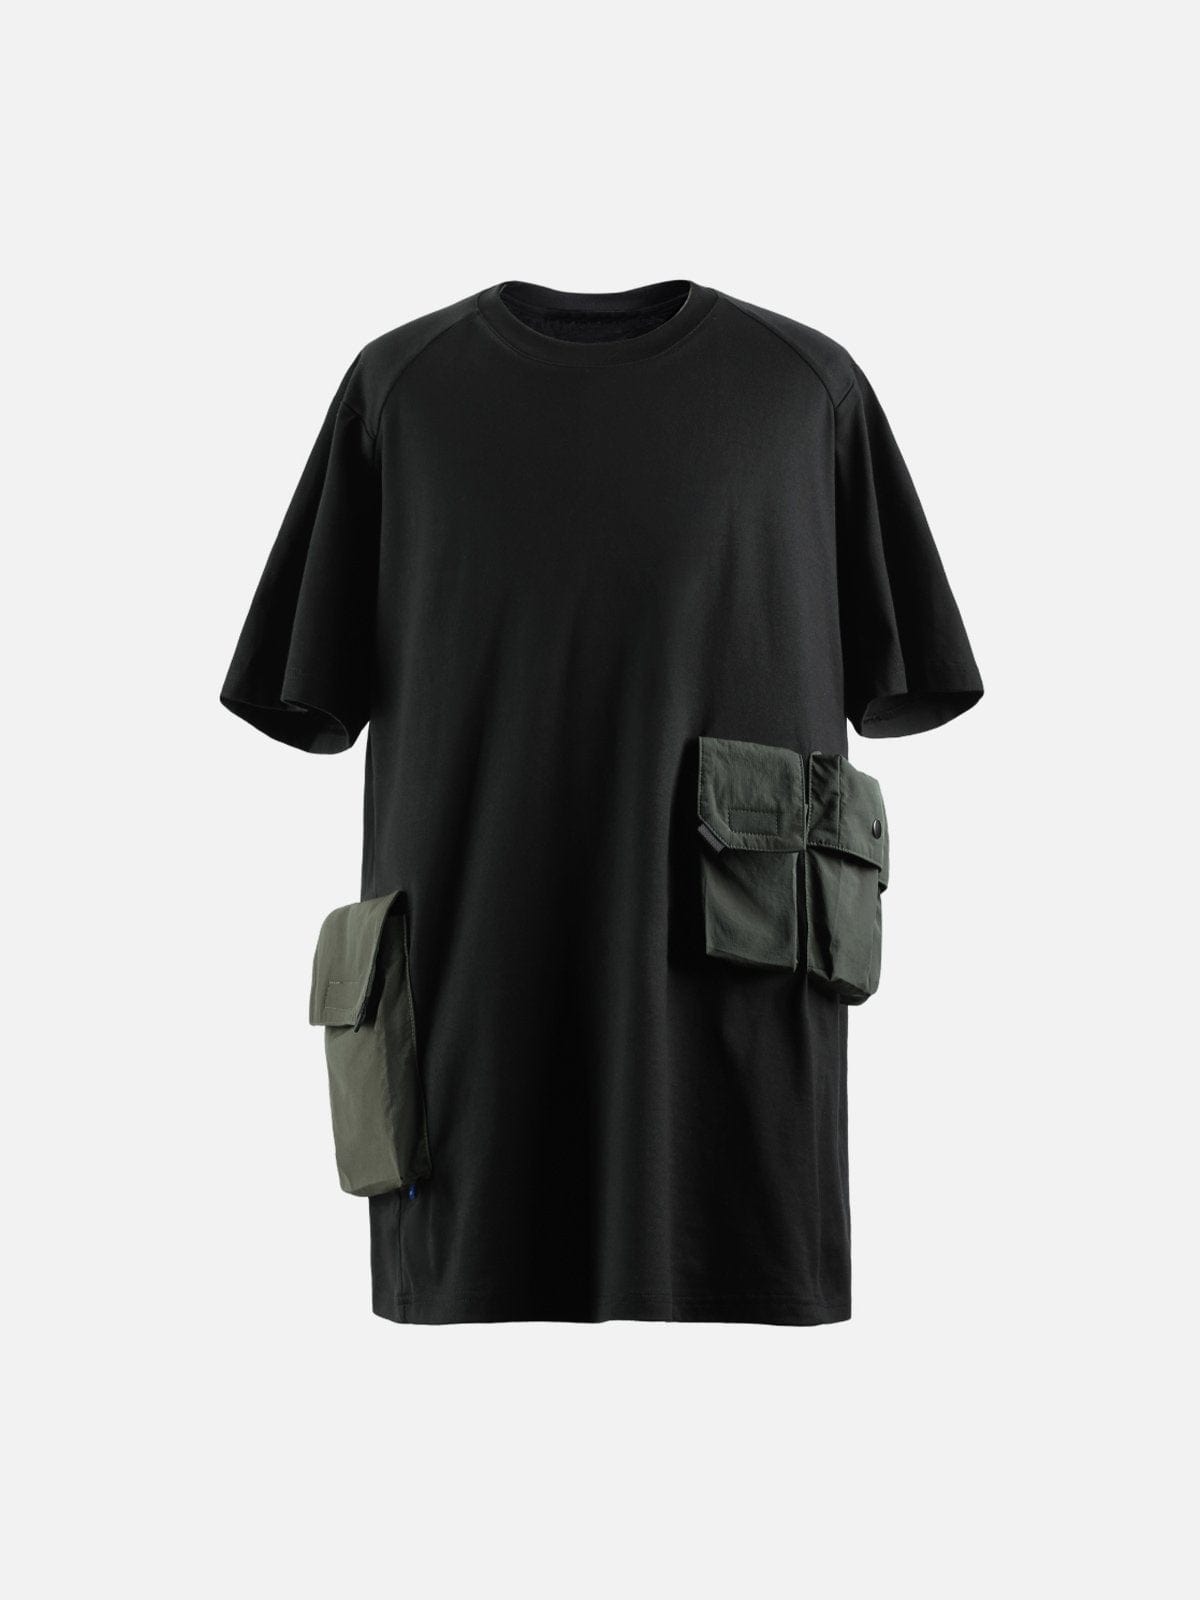 Asymmetrical Multi Pockets Tactical Tee Streetwear Brand Techwear Combat Tactical YUGEN THEORY